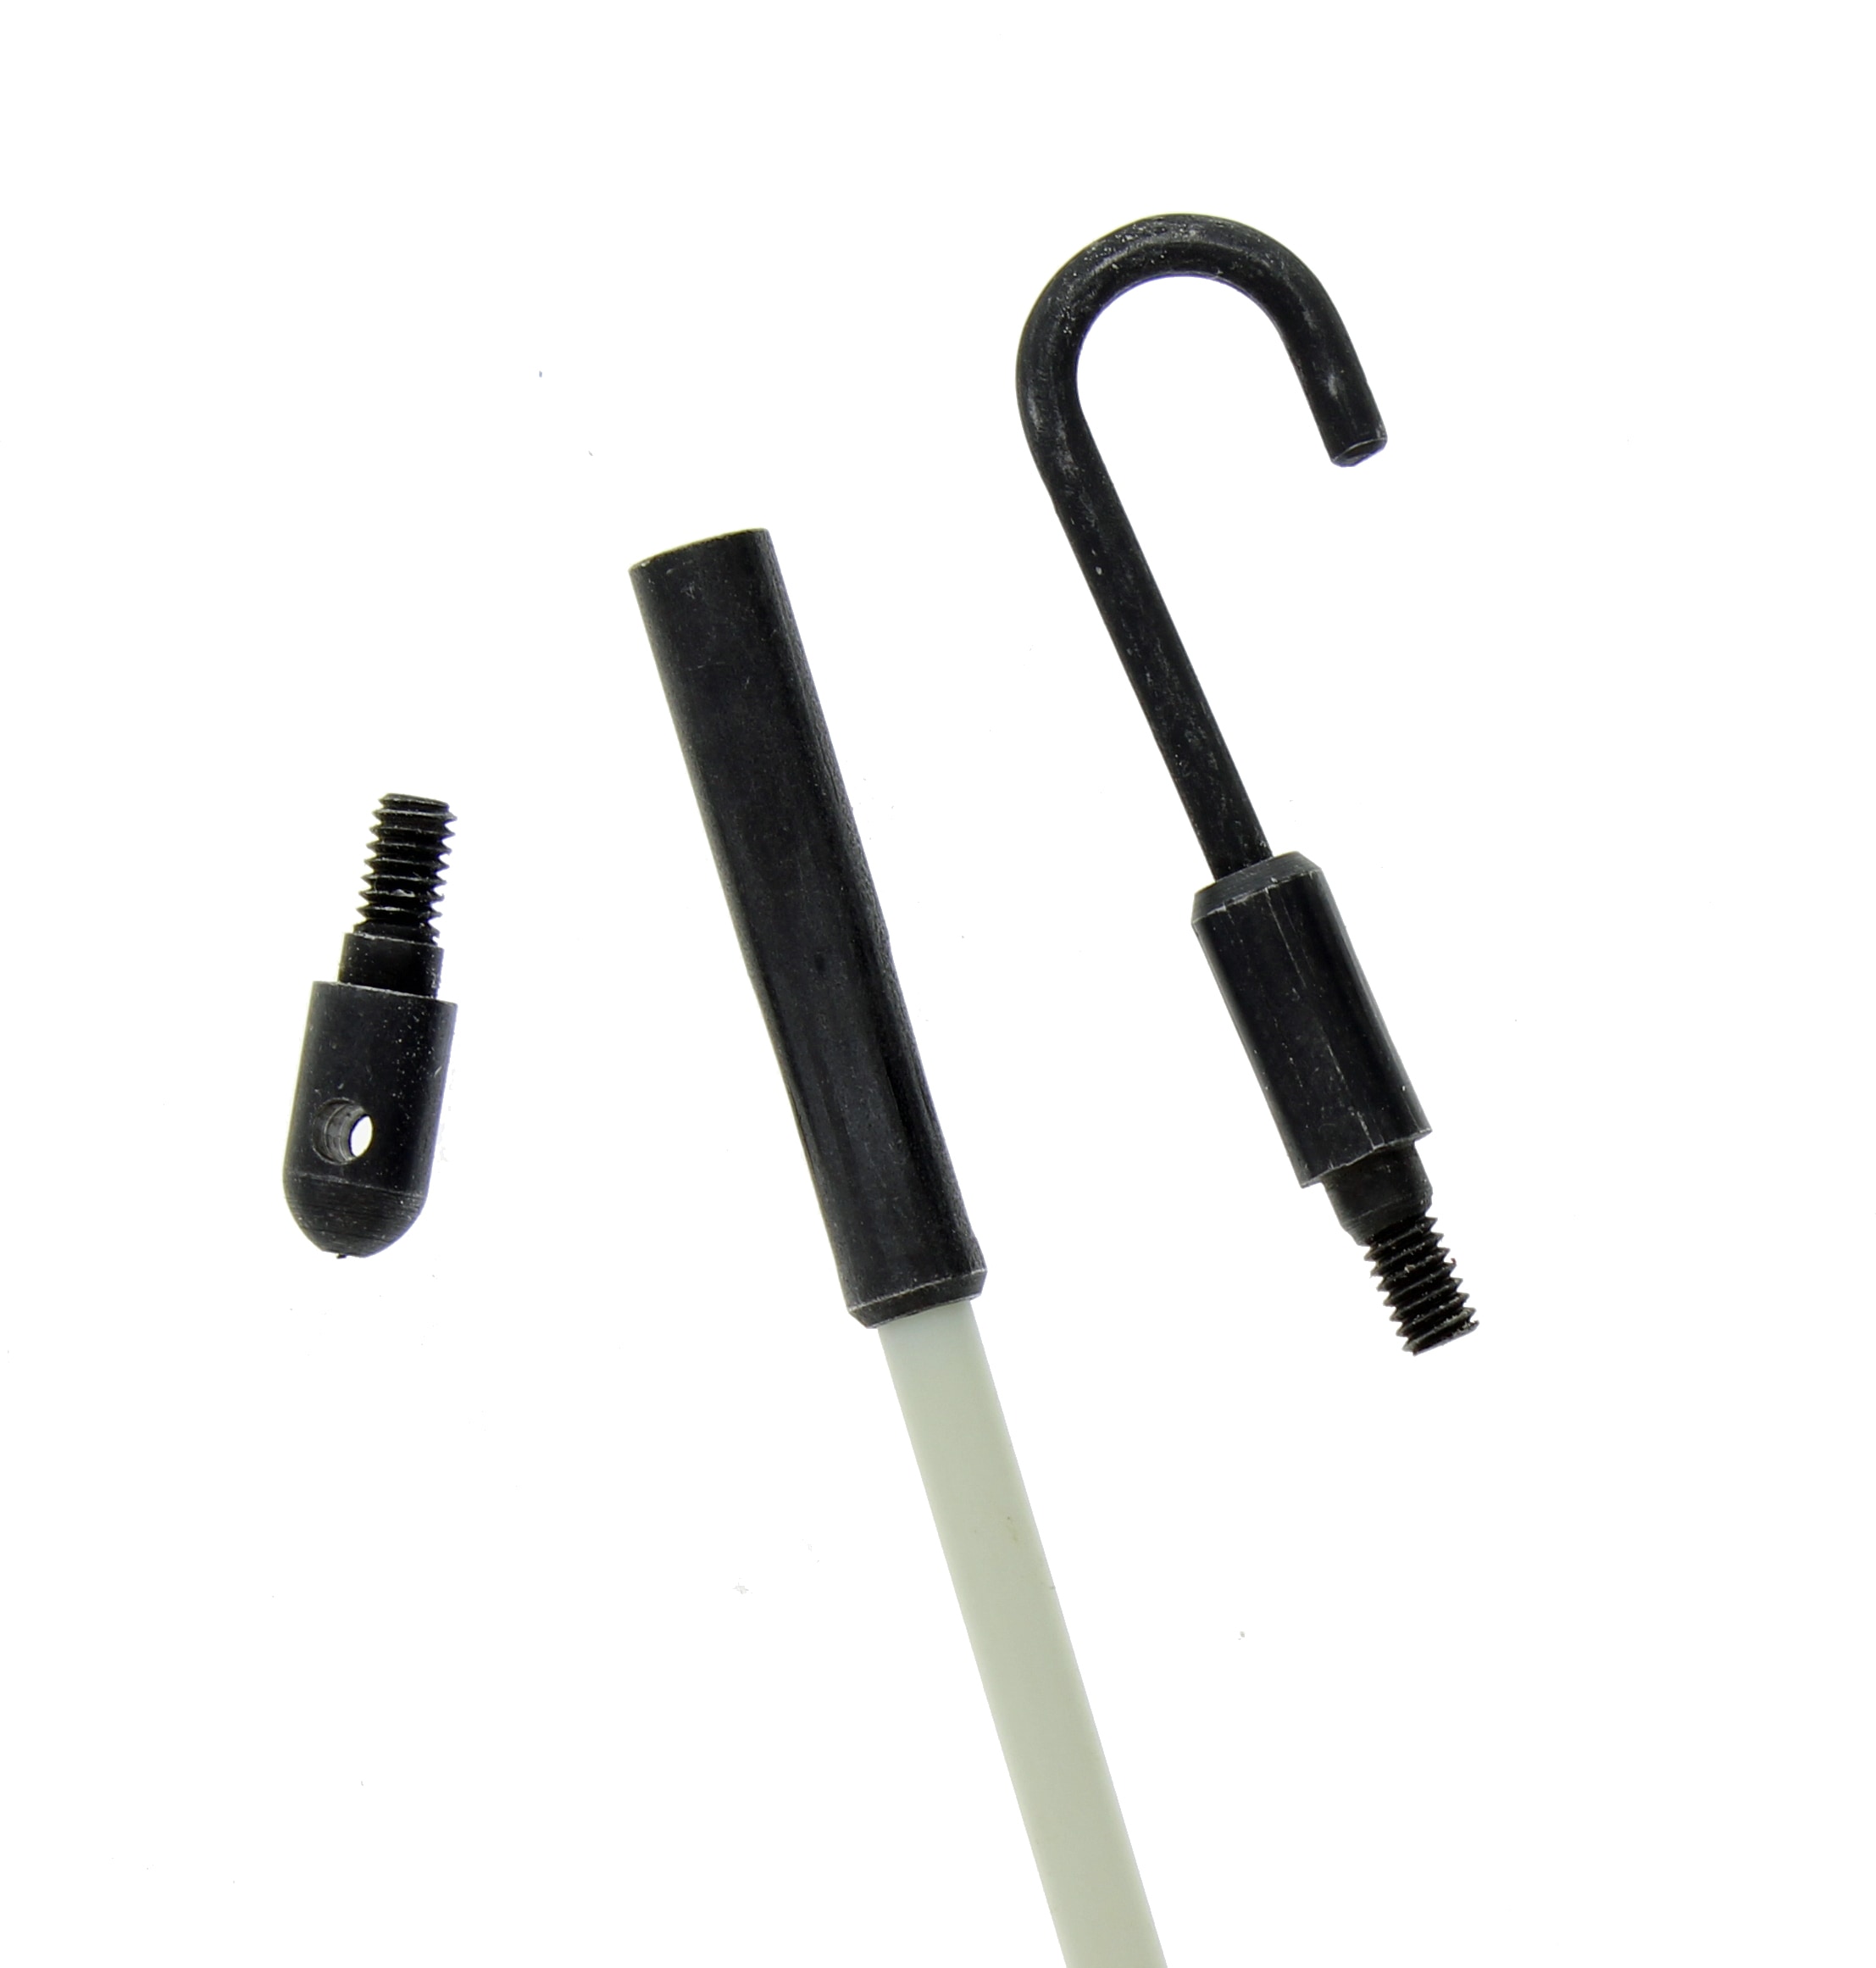 Ideal 31-631 Tuff-Rod Extra Flex Glow Fishing Pole, 12ft Kit